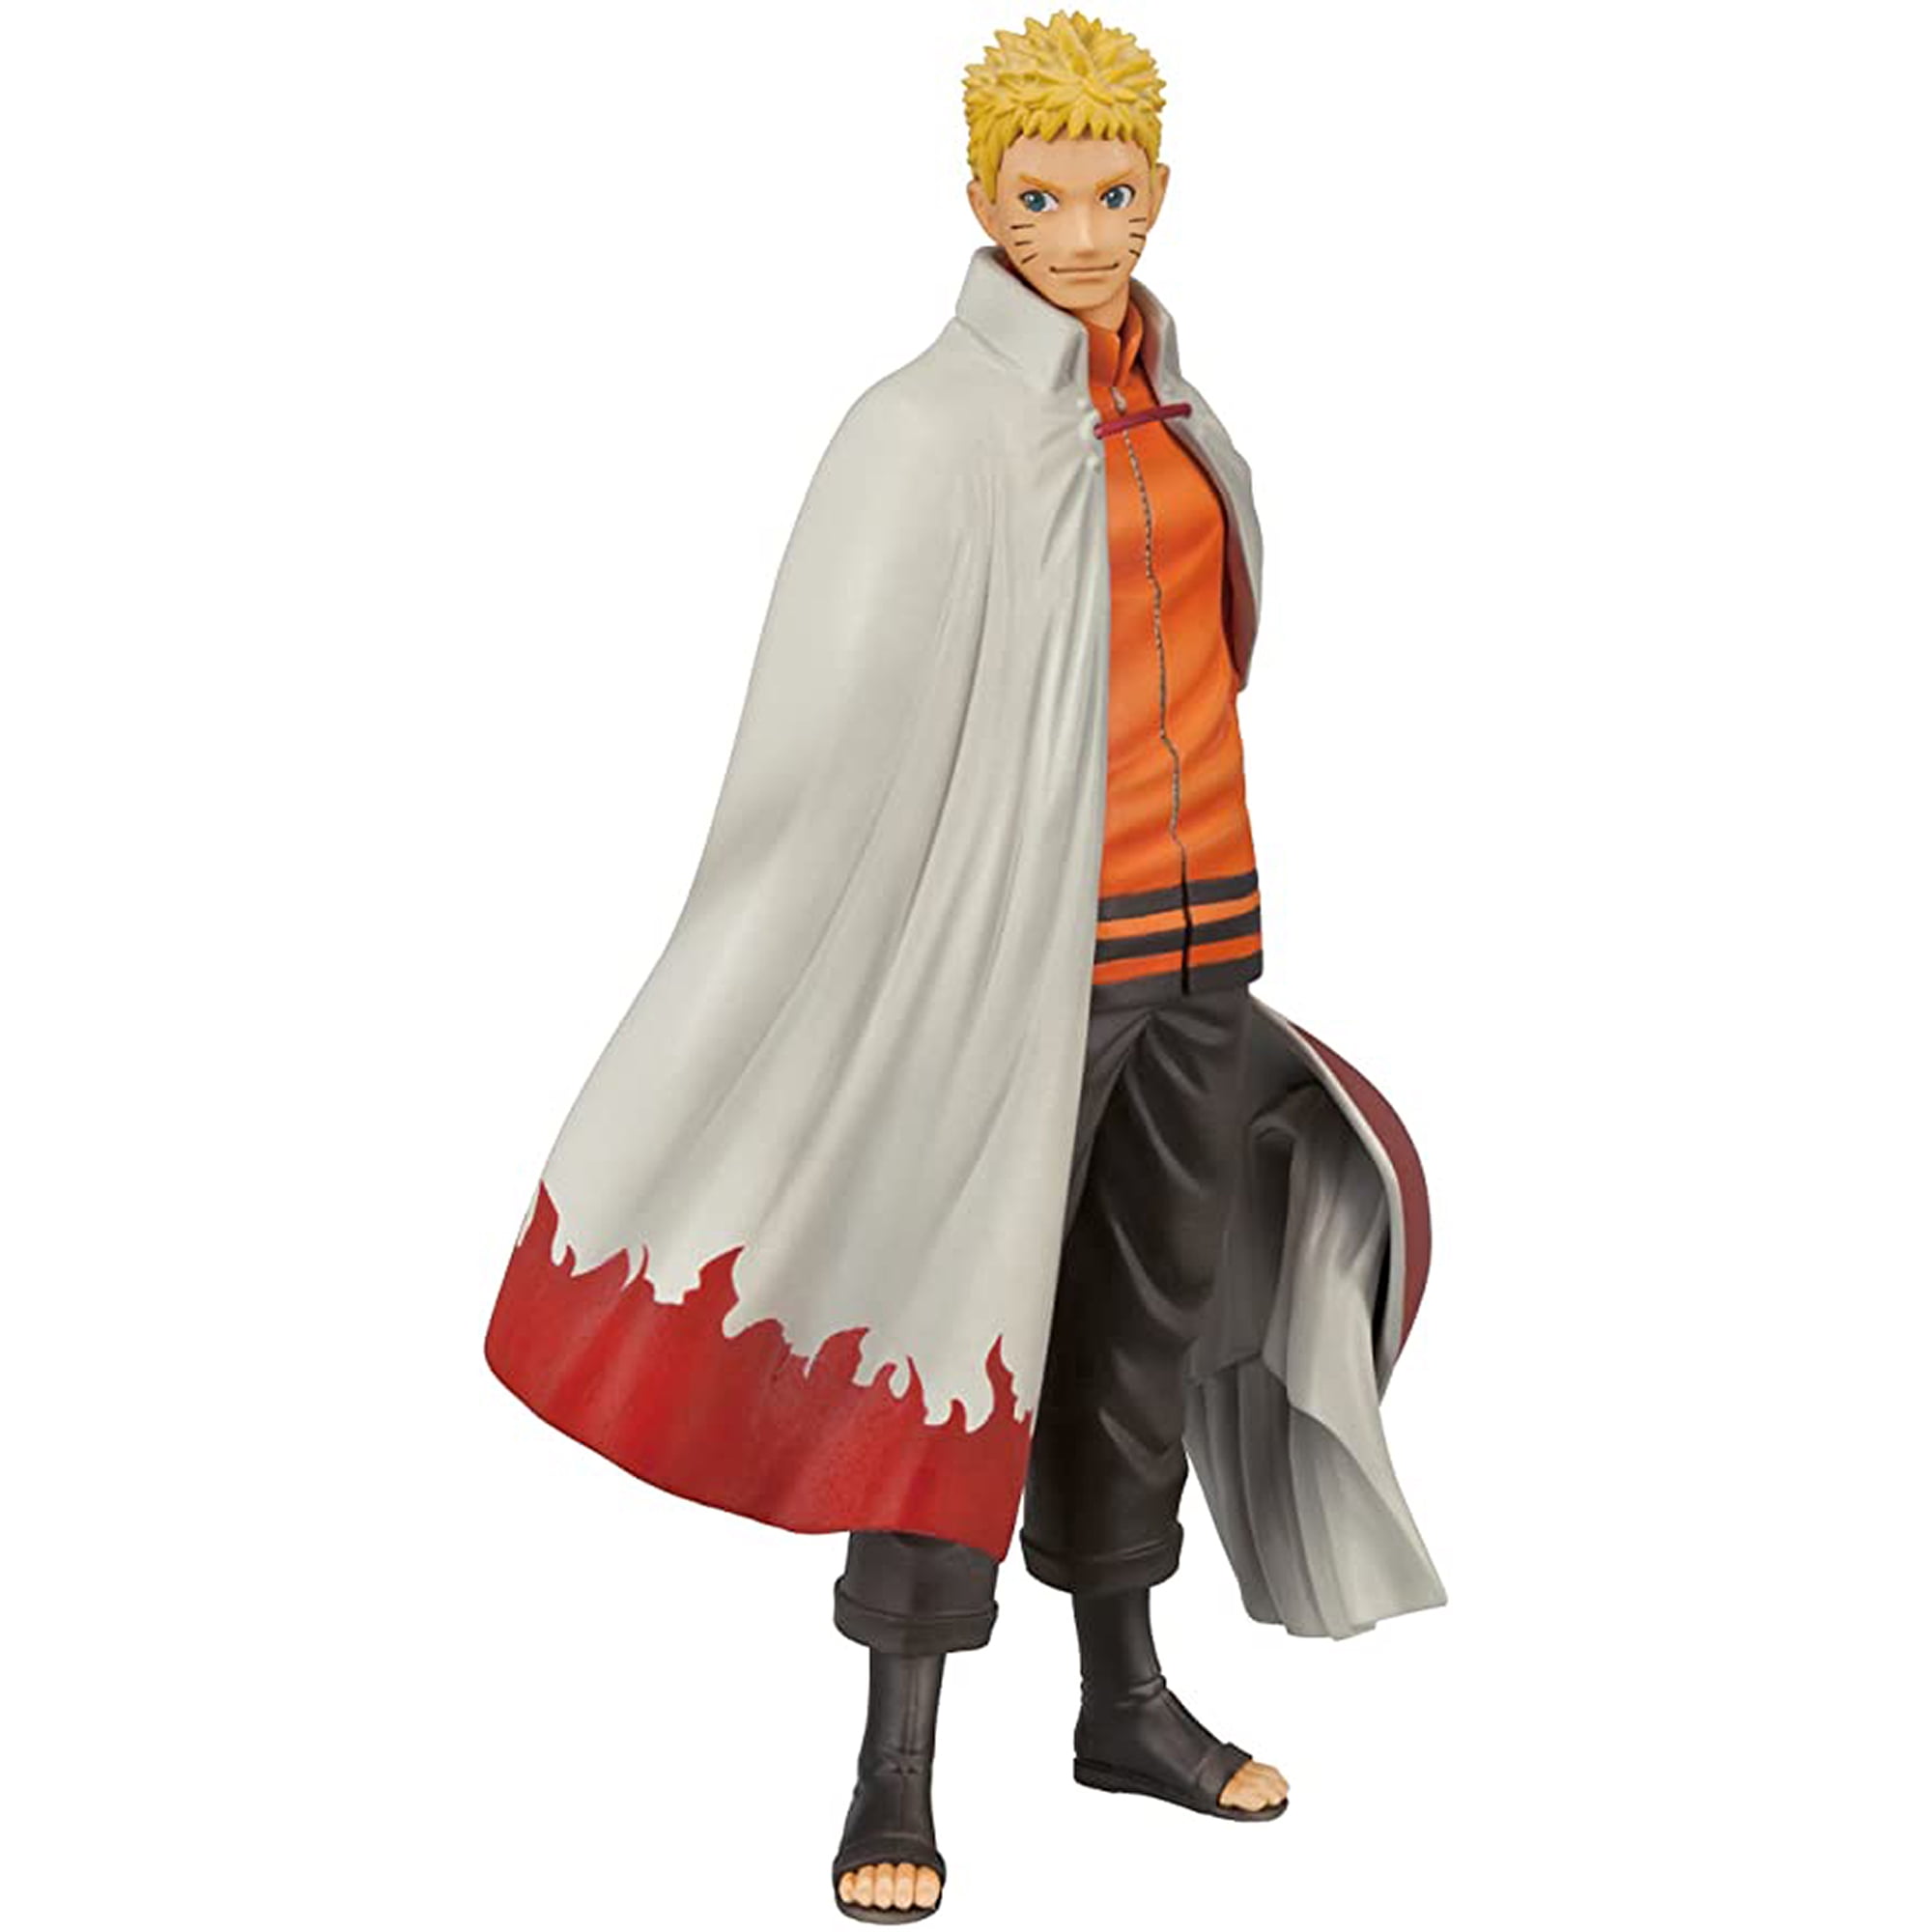 Details about   Naruto Figures Naruto Hinata Model Ornaments Anime Figures No Box 